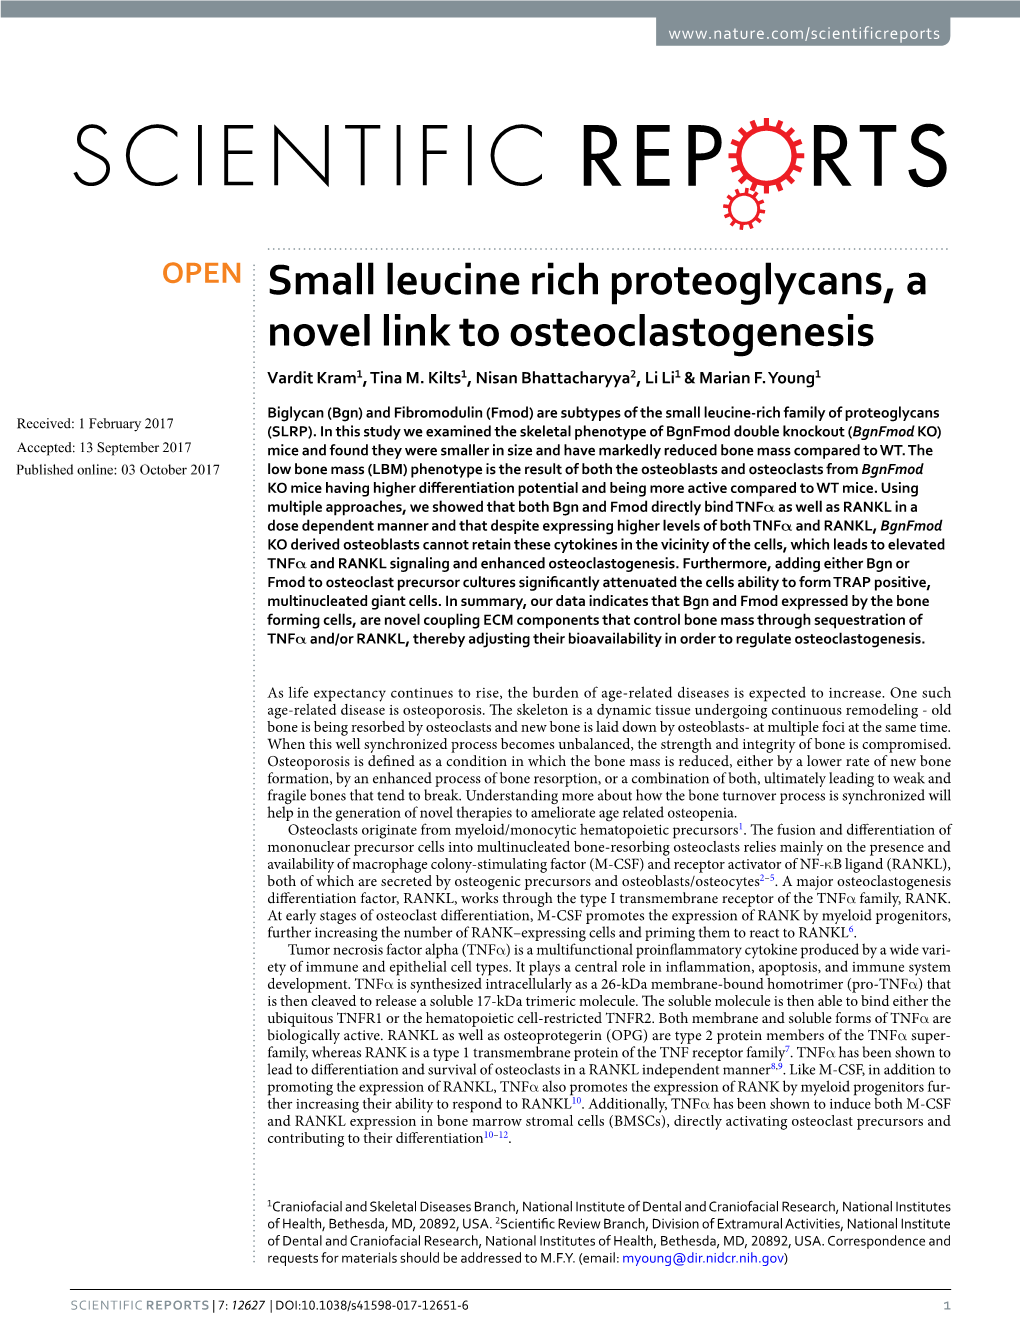 Small Leucine Rich Proteoglycans, a Novel Link to Osteoclastogenesis Vardit Kram1, Tina M